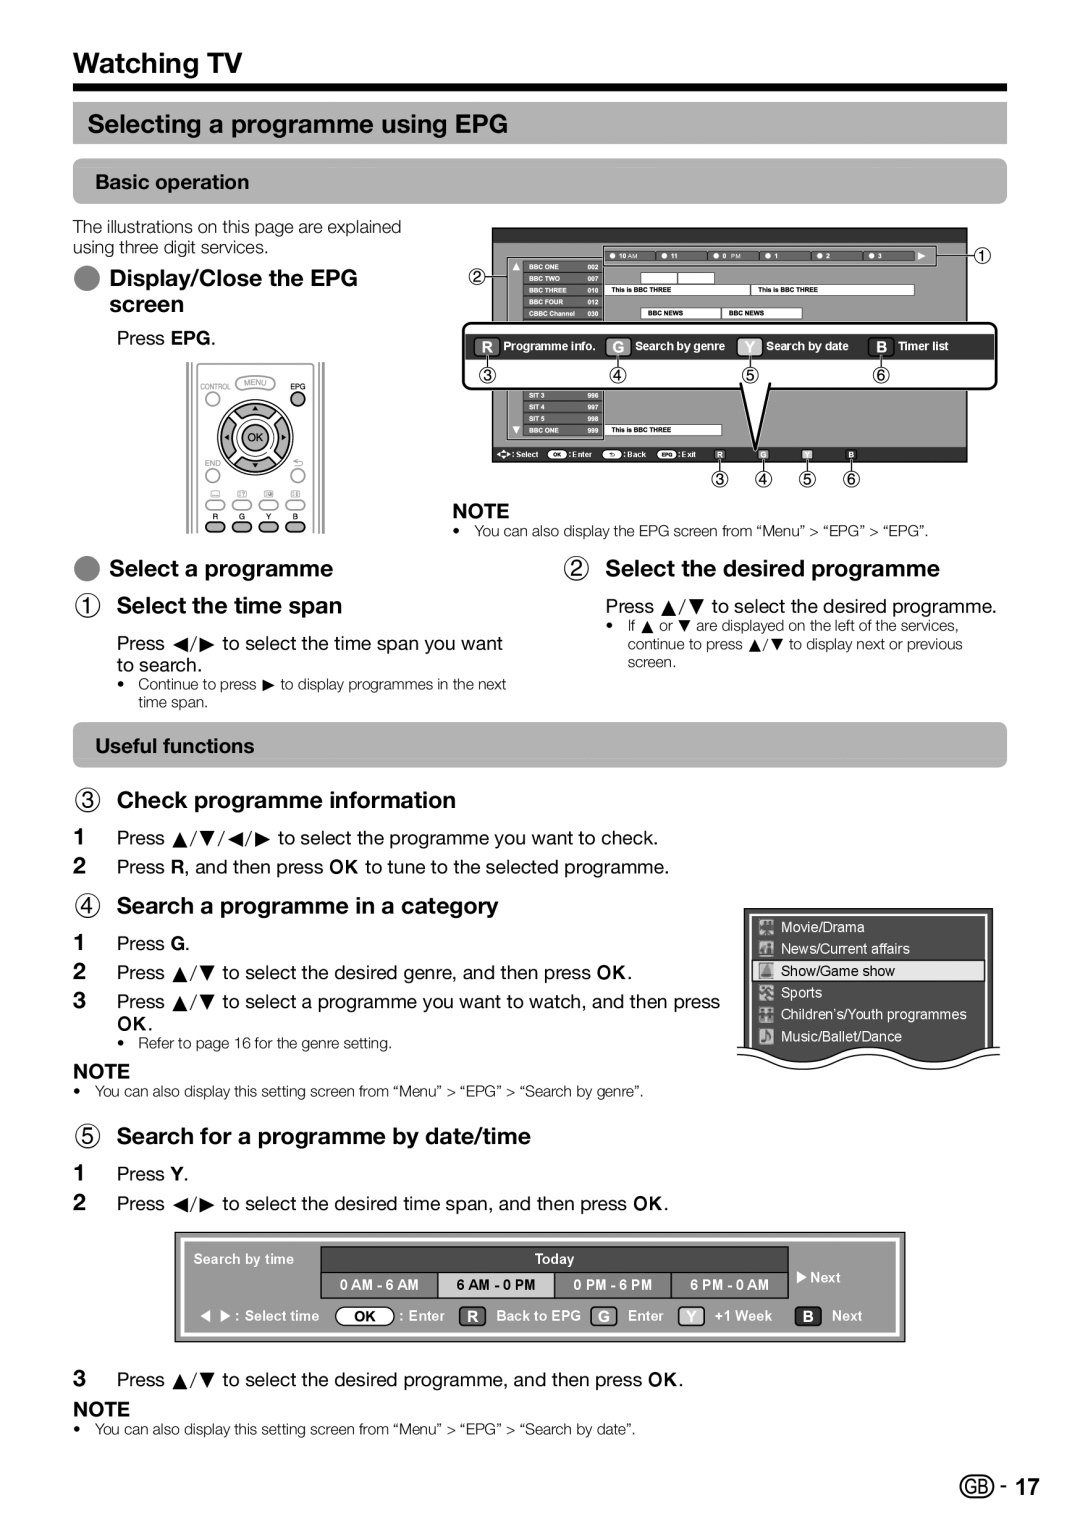 Sharp LC-40LE820E Selecting a programme using EPG, E Display/Close the EPG screen, Check programme information 